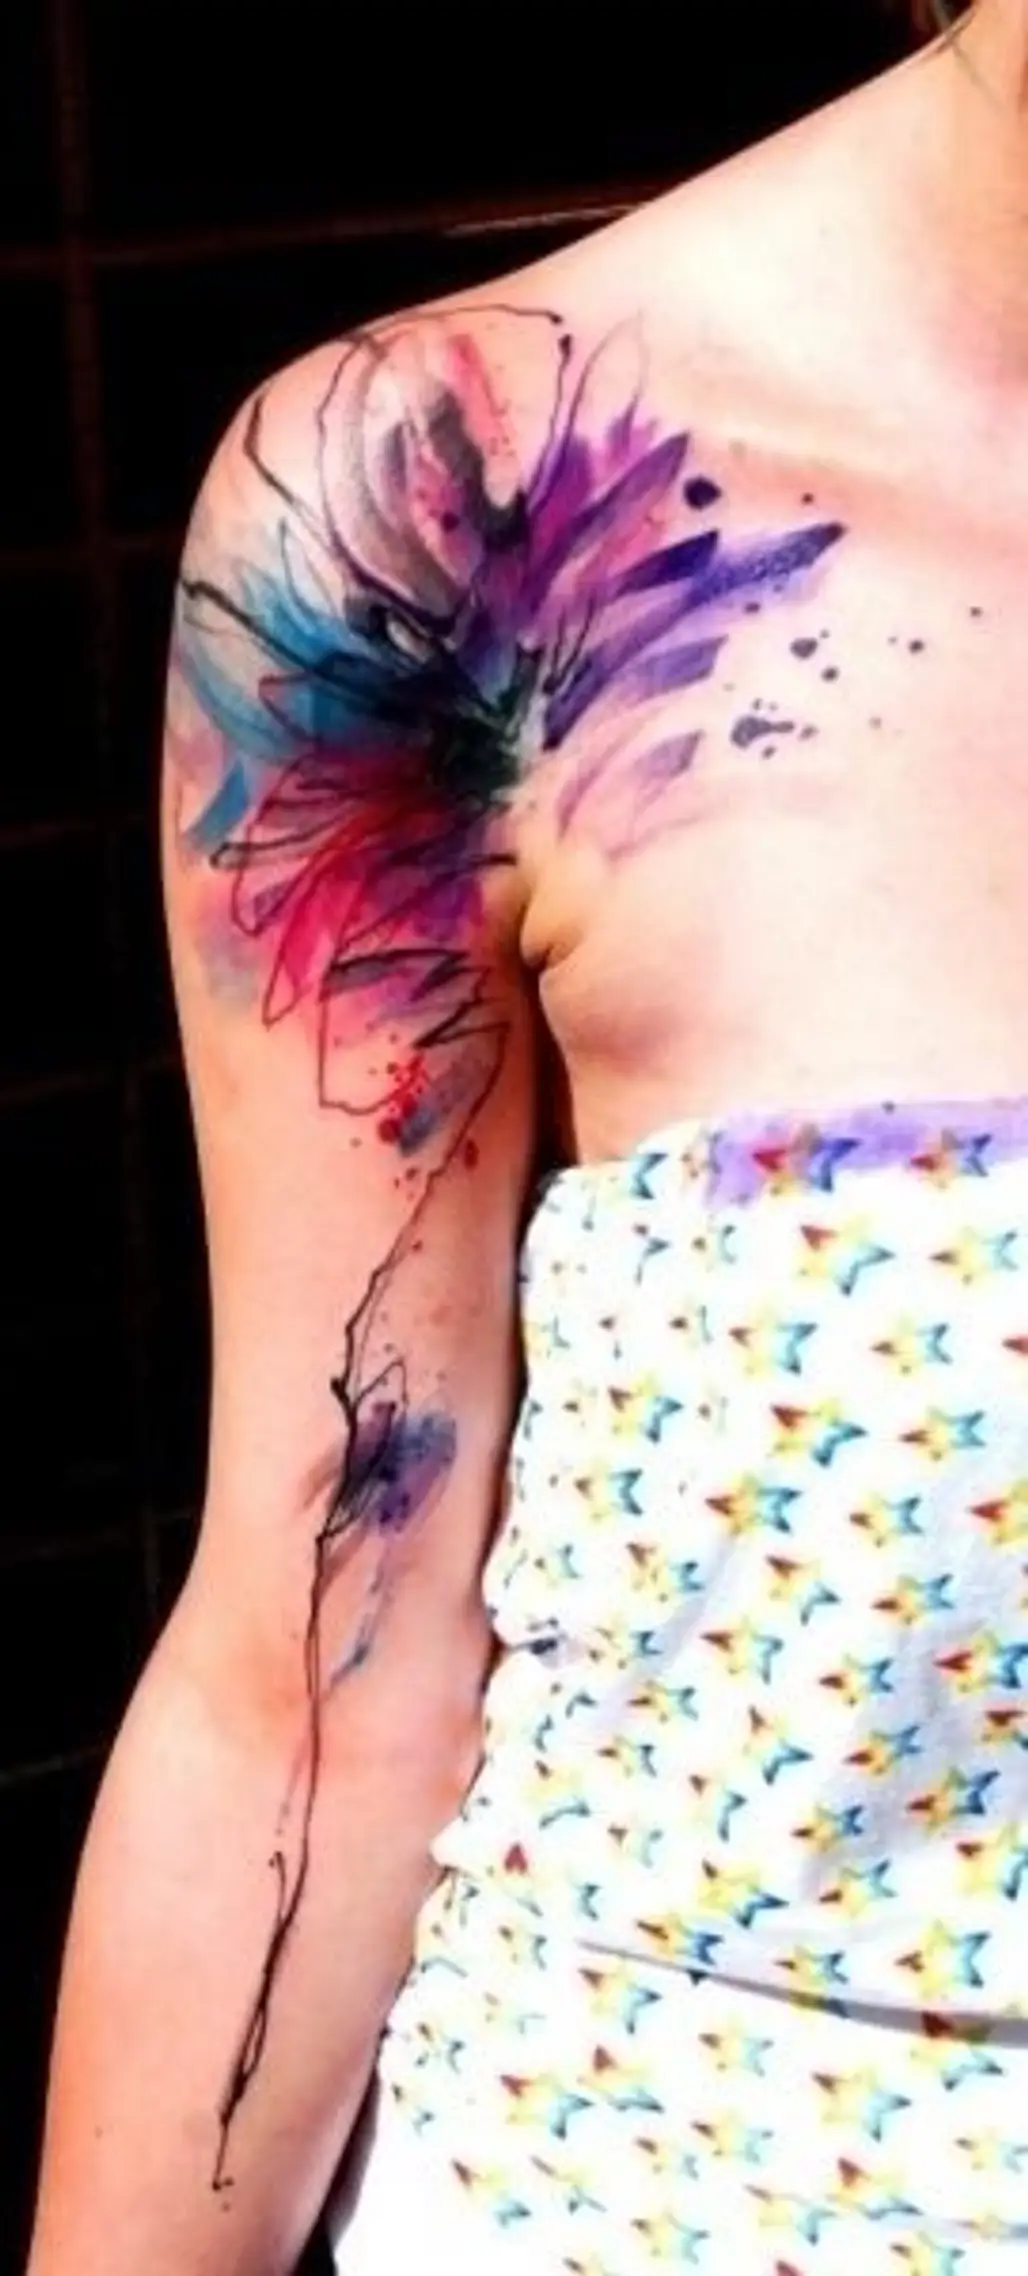 tattoo,arm,leg,hand,sense,